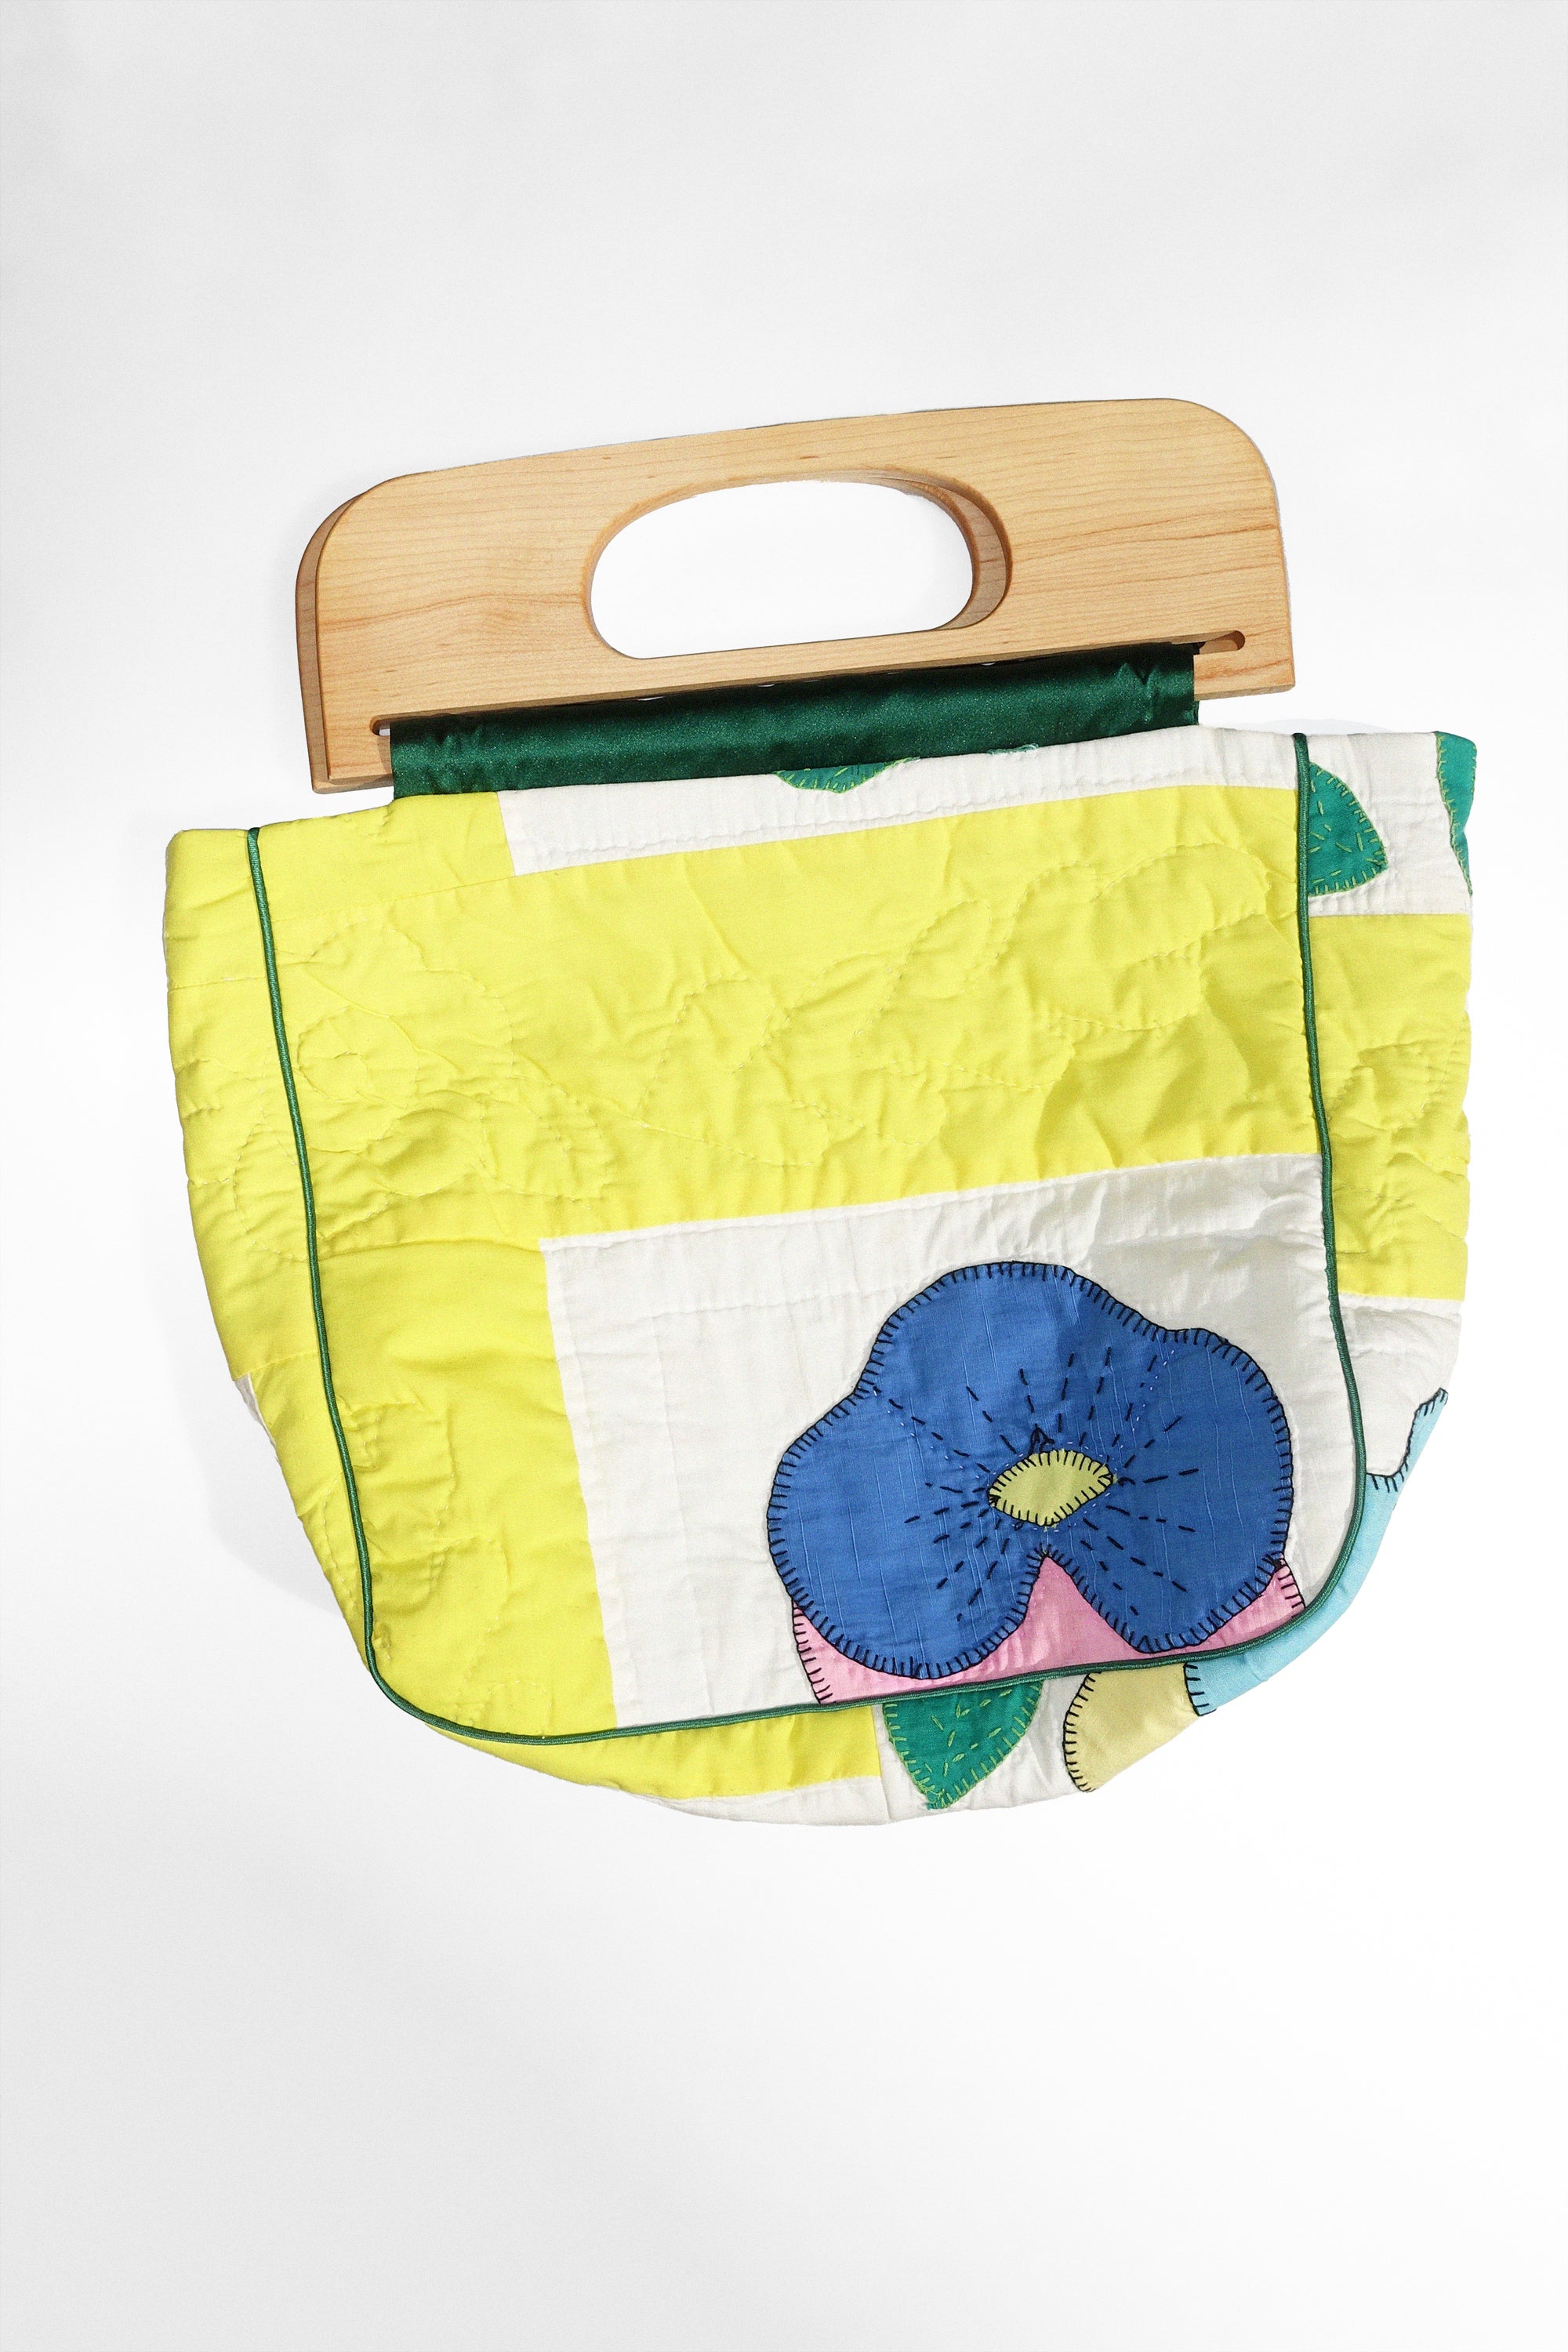 Quilt Boxy Handbag: OOAK by Carleen